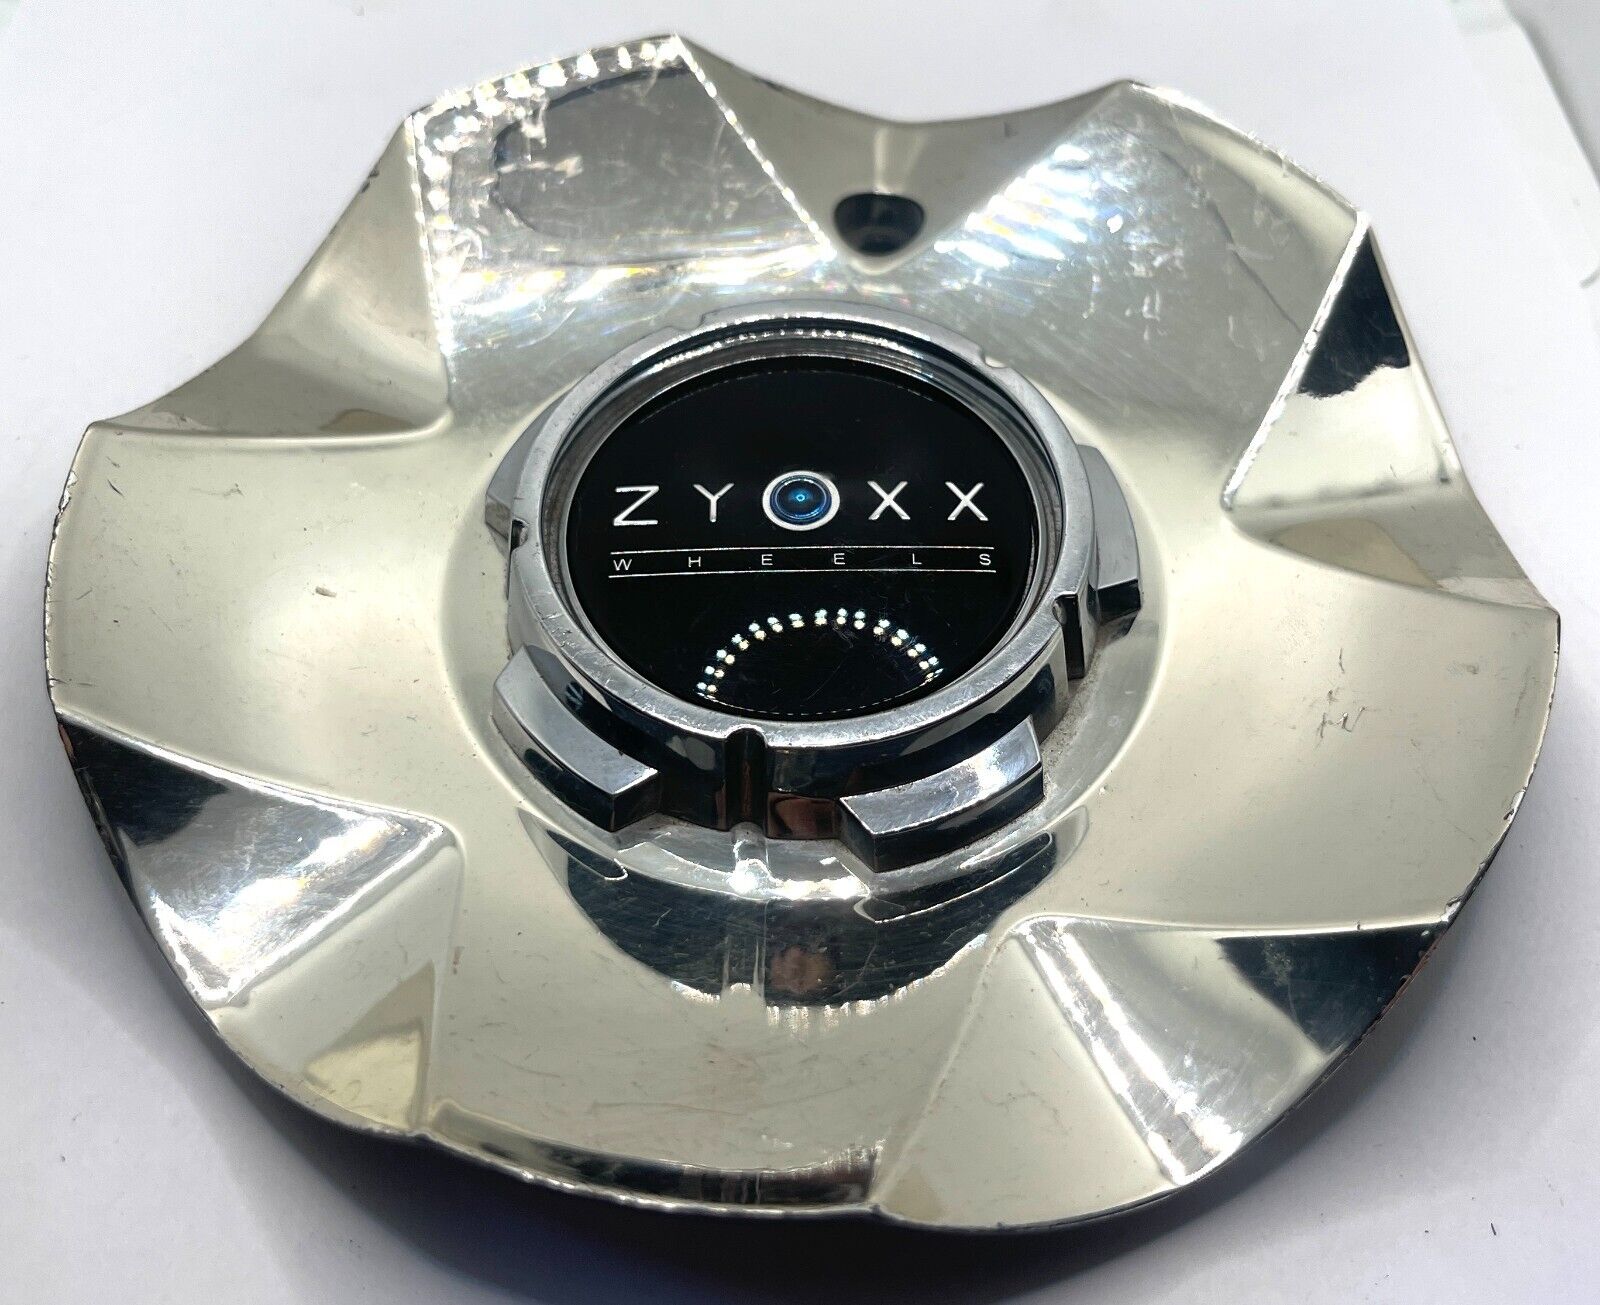 zx-14 Zyoxx Black / Chrome Wheel Center Cap